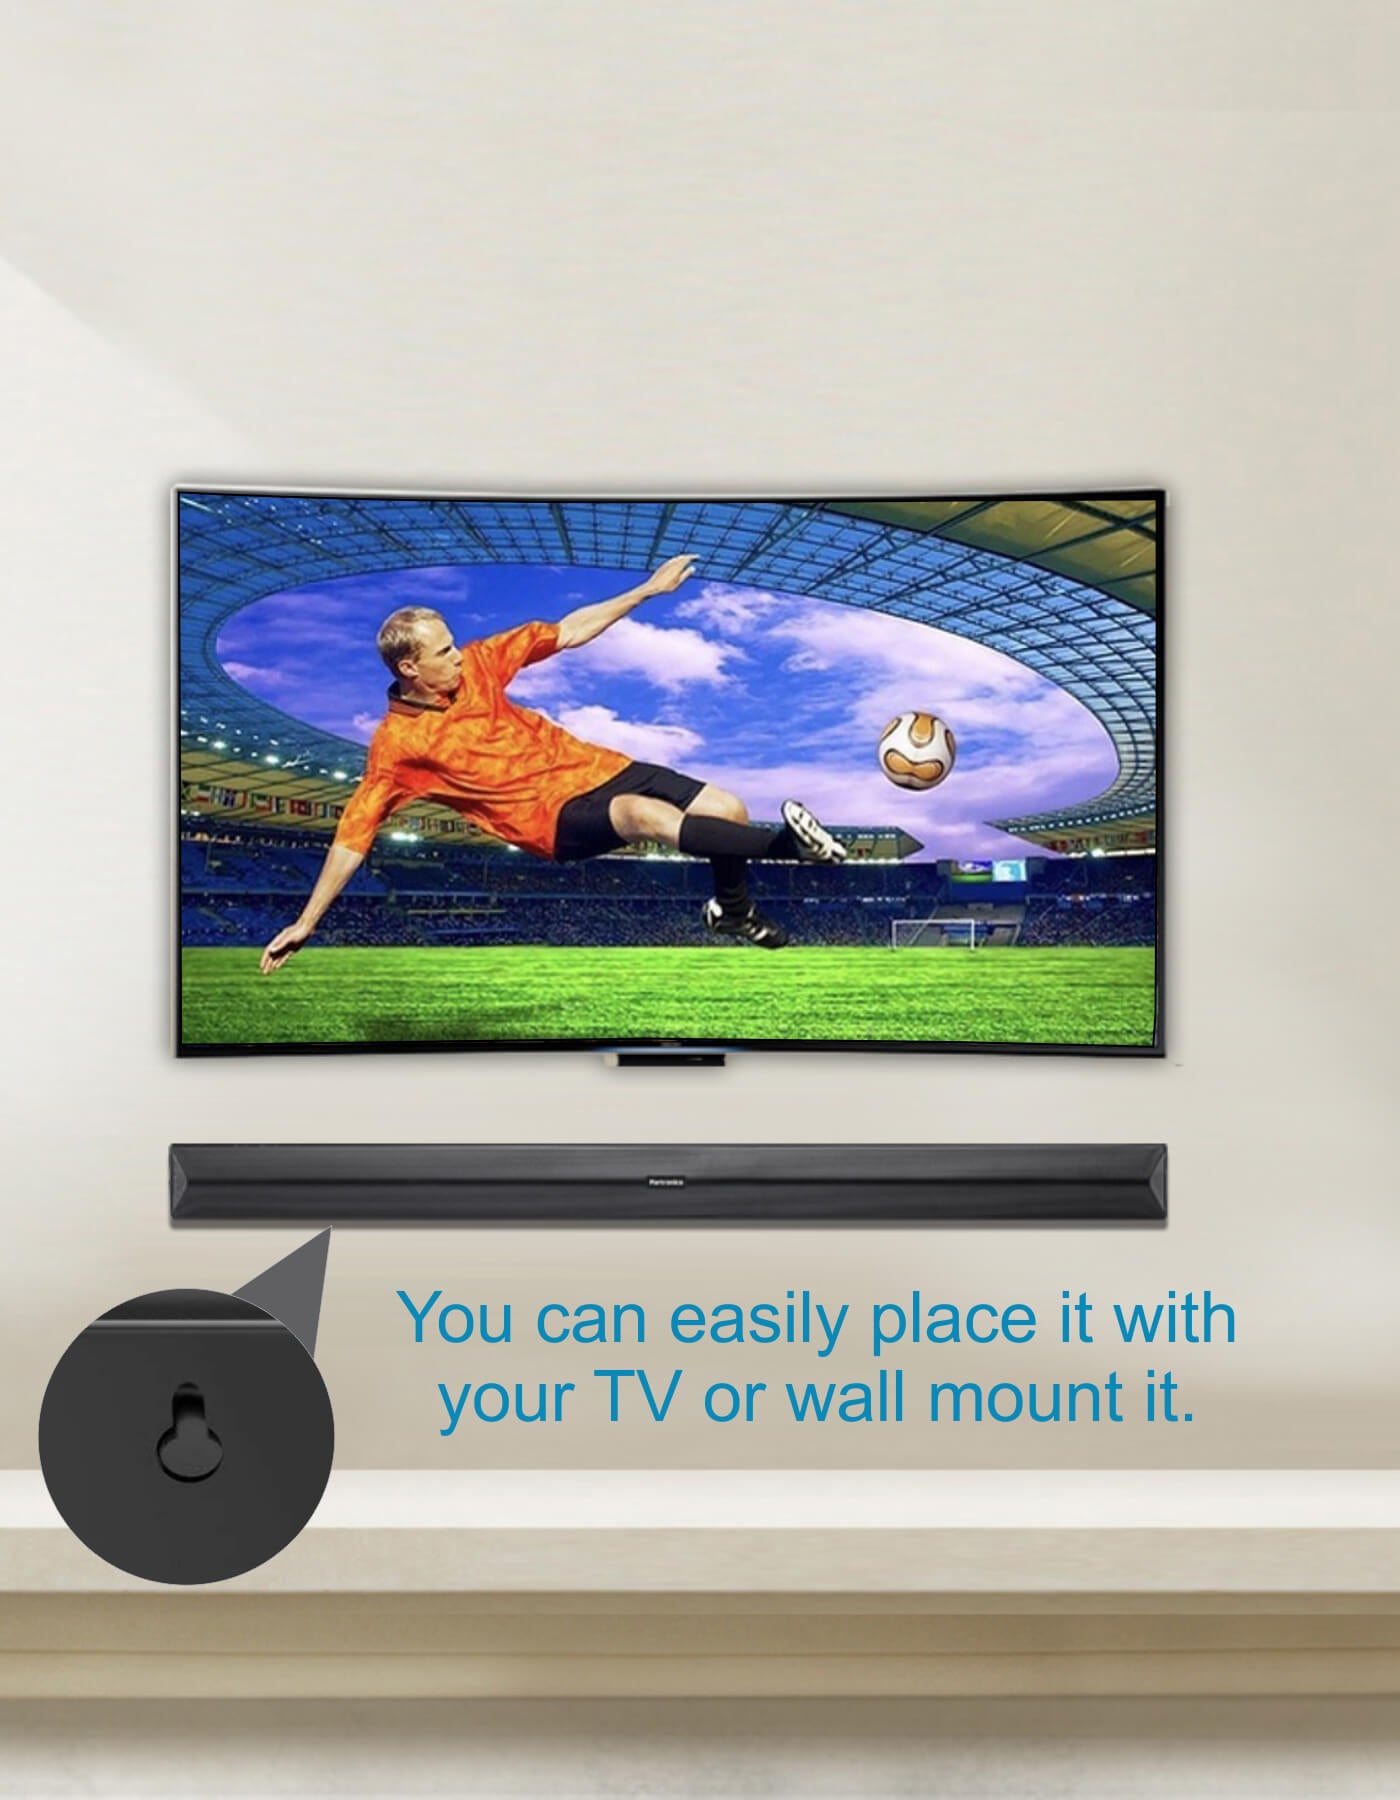 Portronics Sound Slick II: Wireless TV Sound Bar & Portable Sound Bar easy to hang on wall